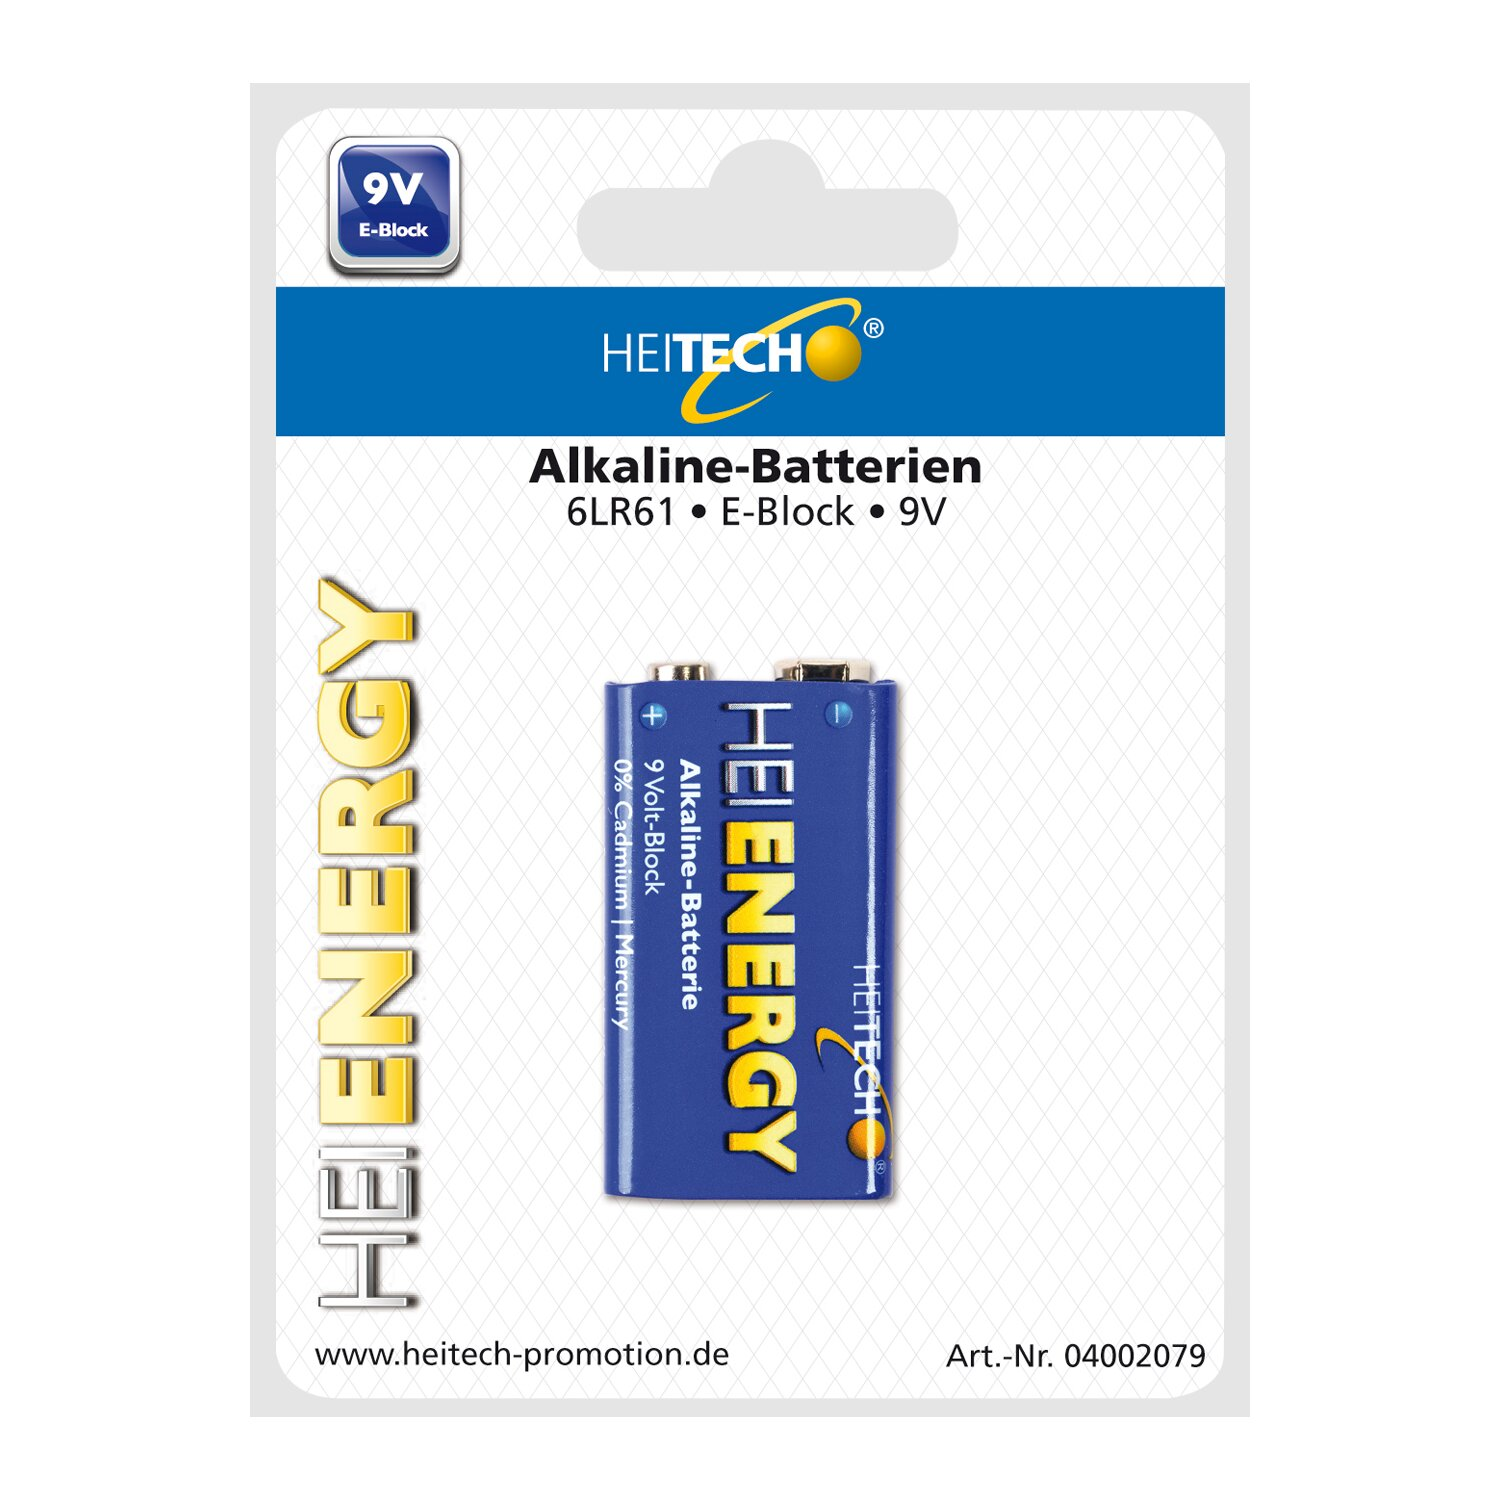 Alkaline Batterie Pack E-Block 1-er HEITECH